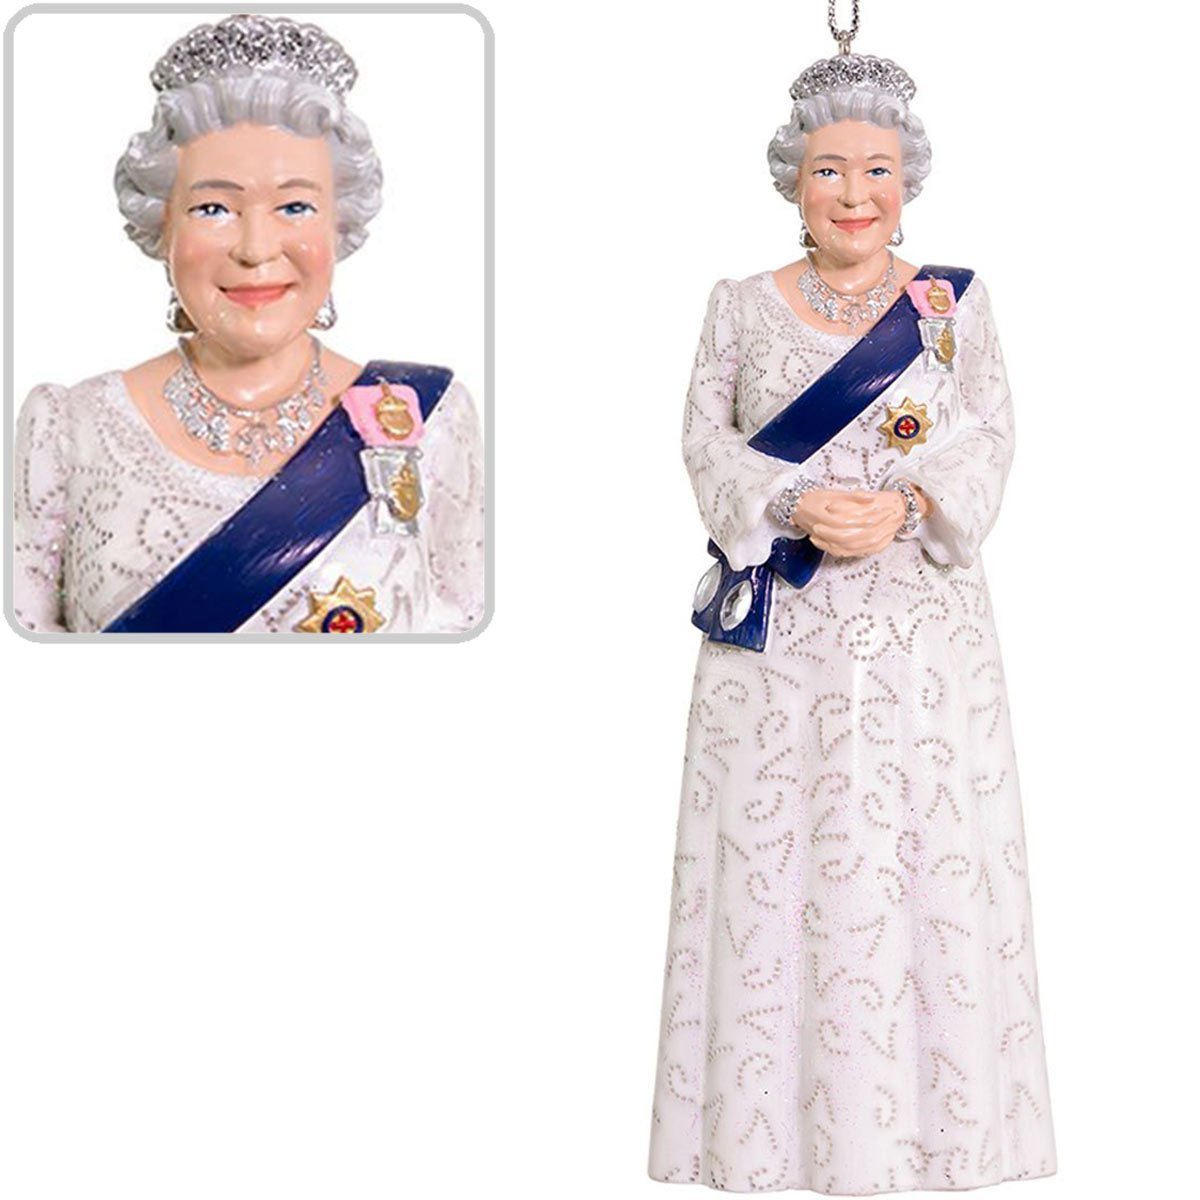 Queen Elizabeth 4 3/4-Inch Resin Ornament by Kurt S. Adler - Simon's Collectibles